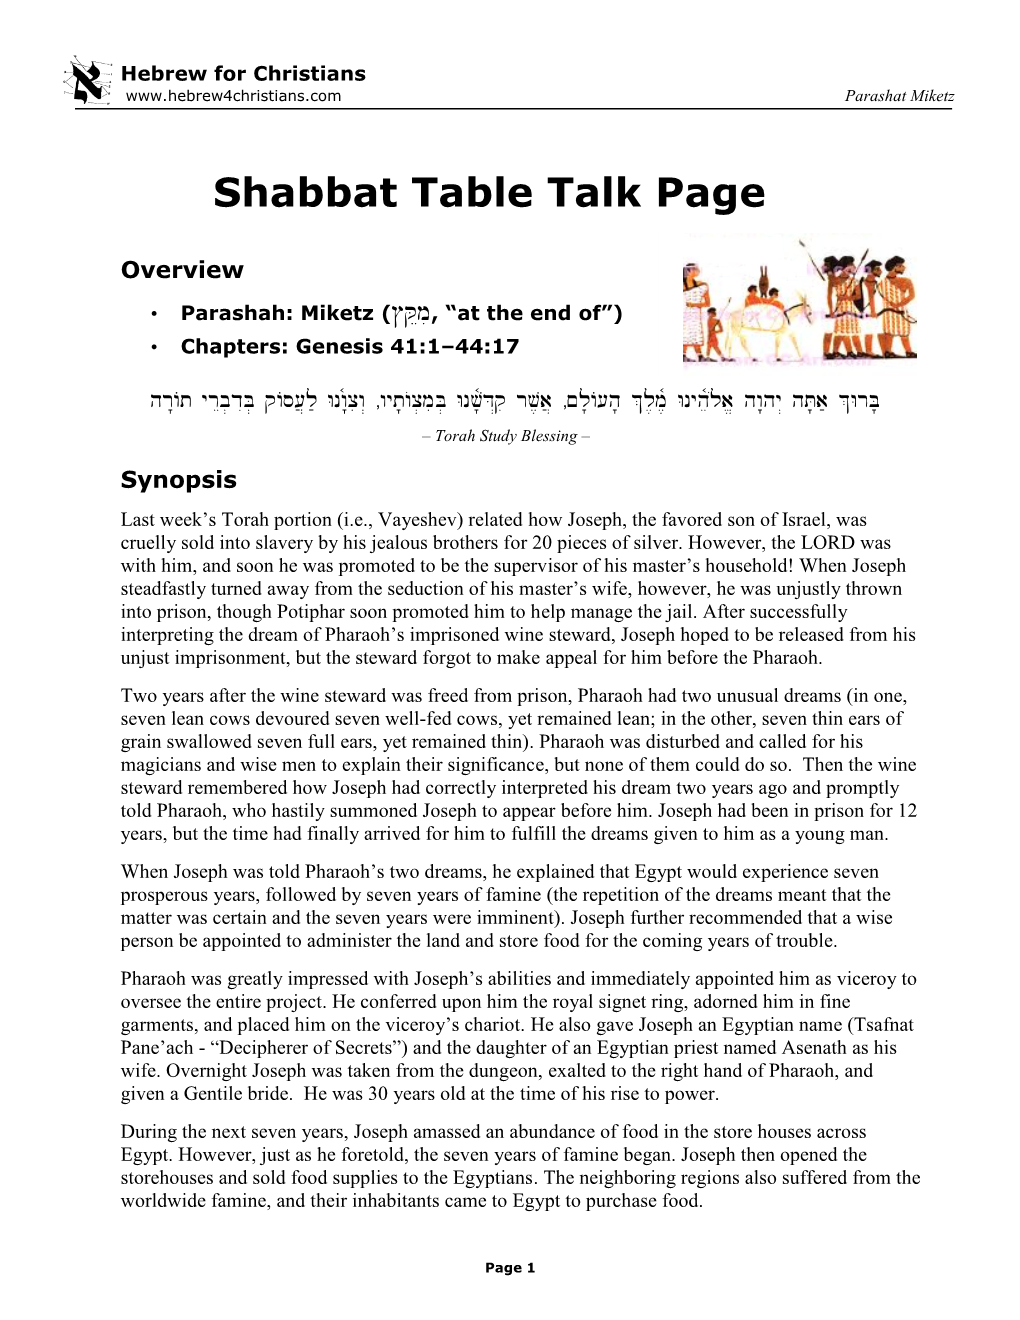 Shabbat Table Talk for Miketz